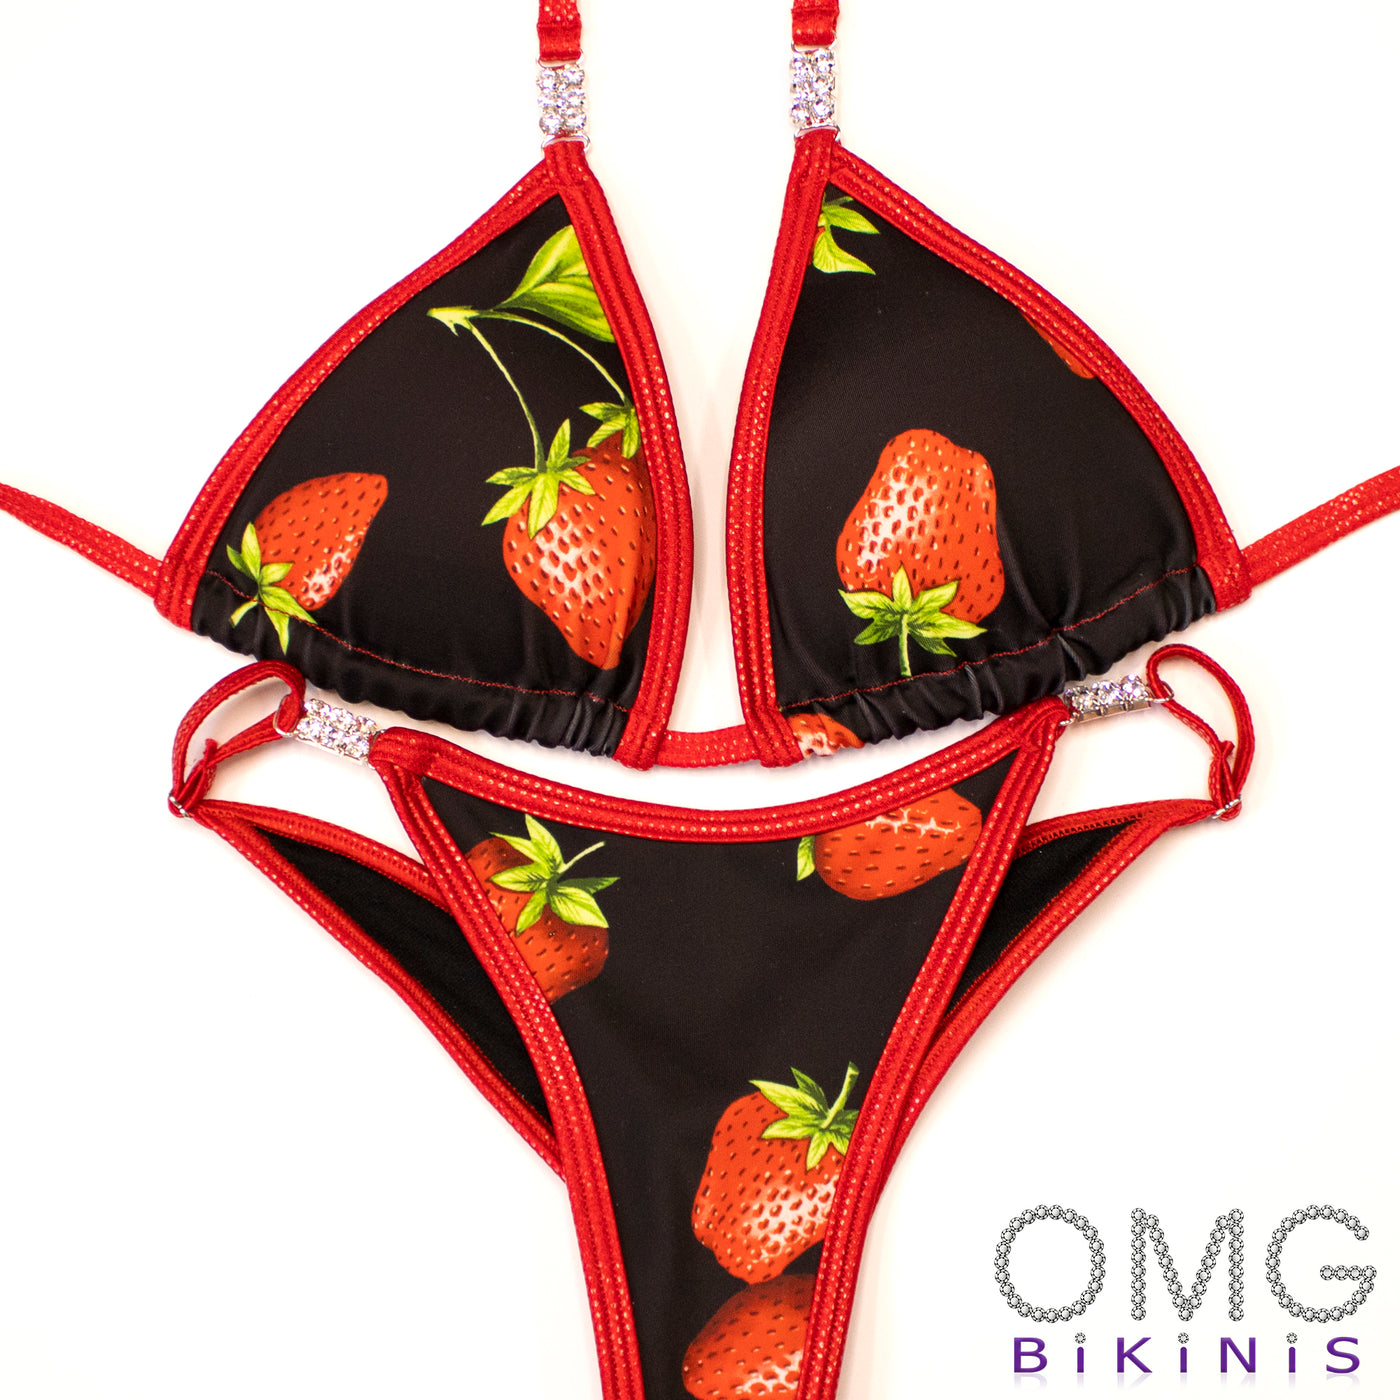 Strawberry Posing Suit  | Scrunch Butt Bikini | NPC/IFBB Practice Suit